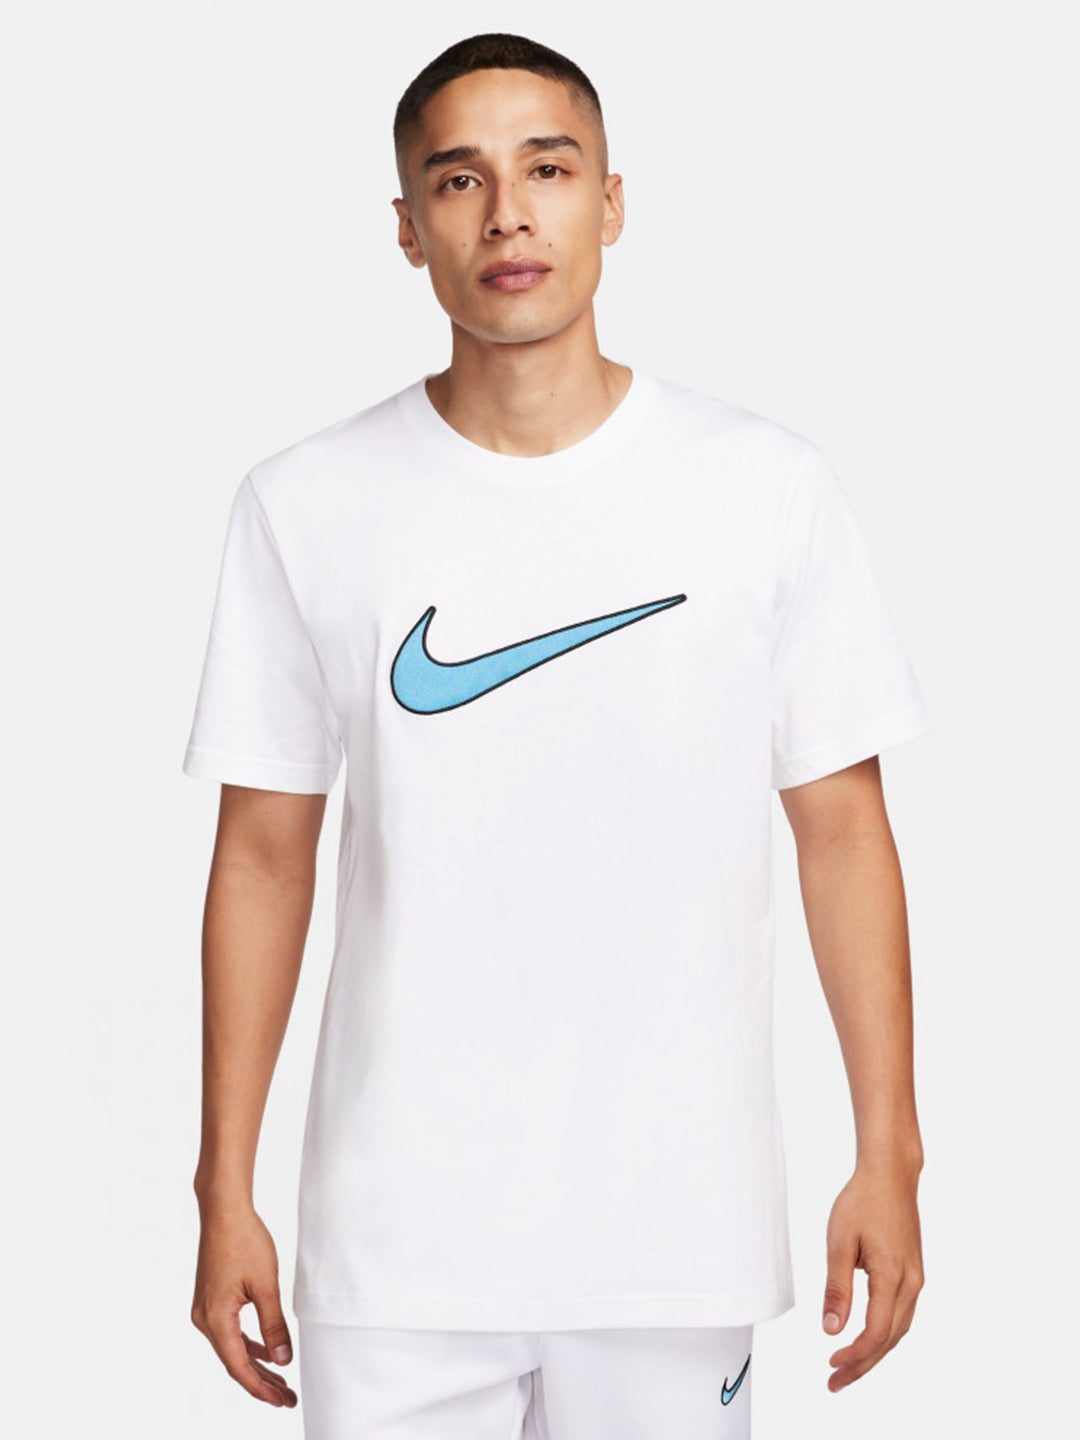 Nike t-shirt bianco con logo centrale celeste